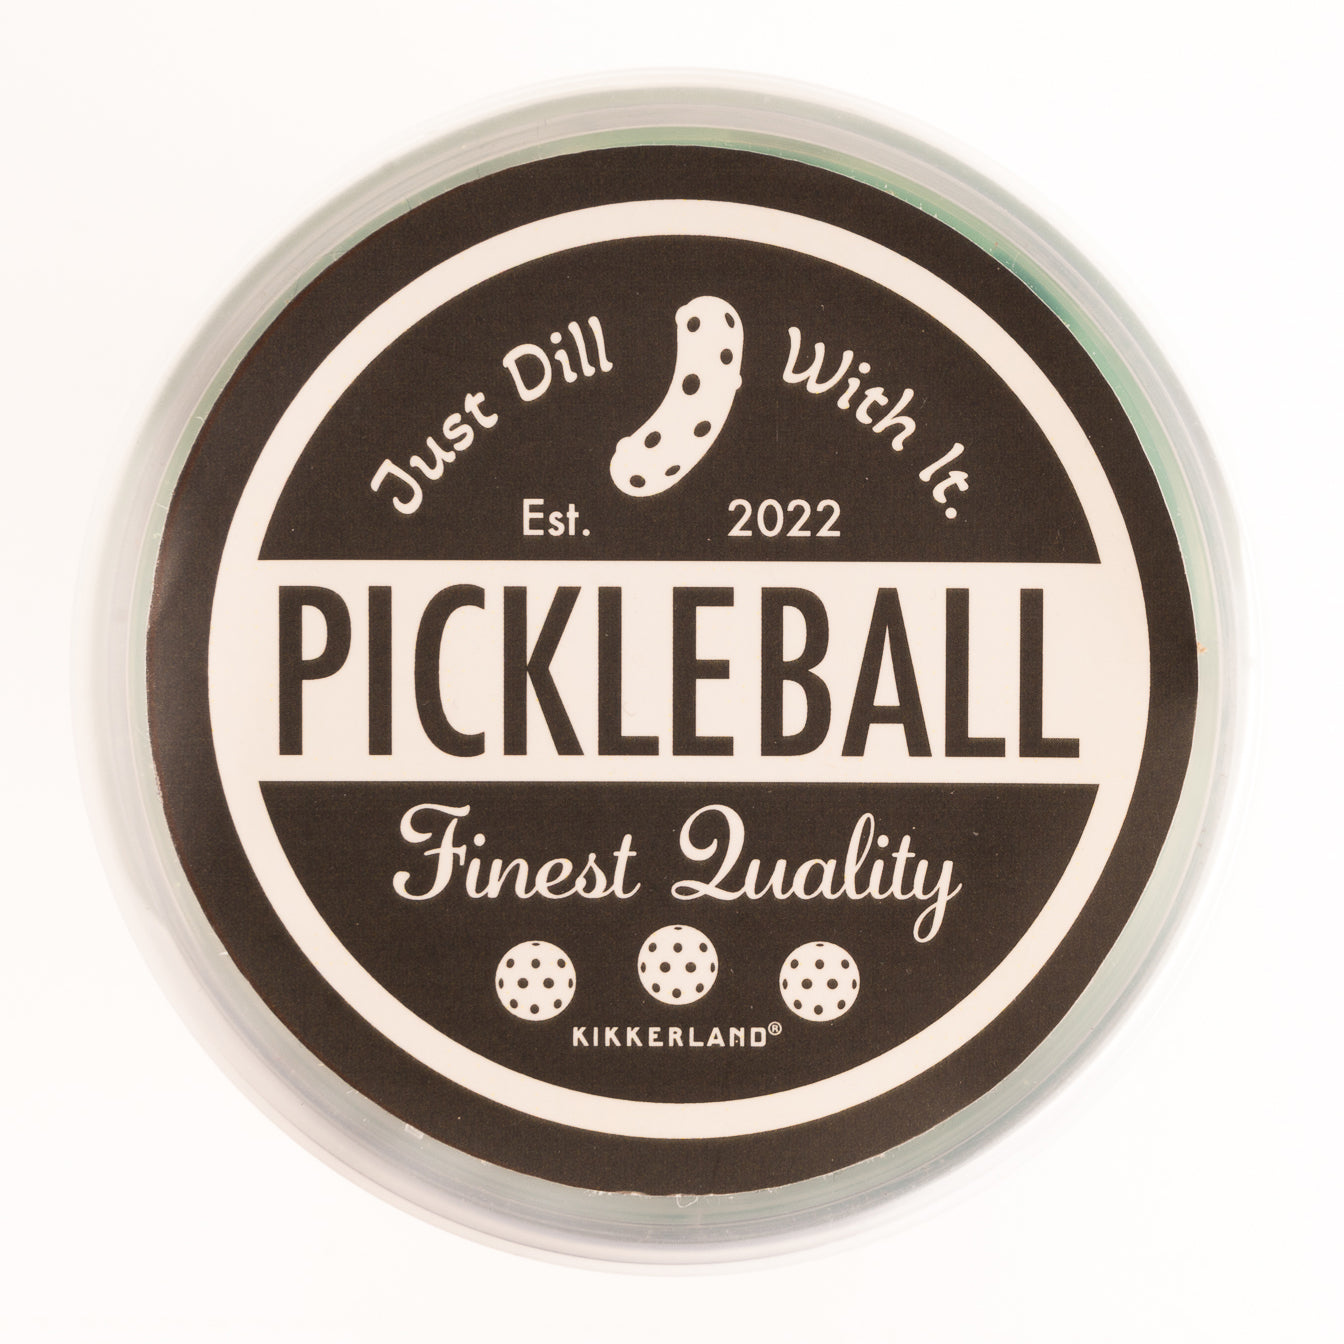 Pickleballs in a Jar